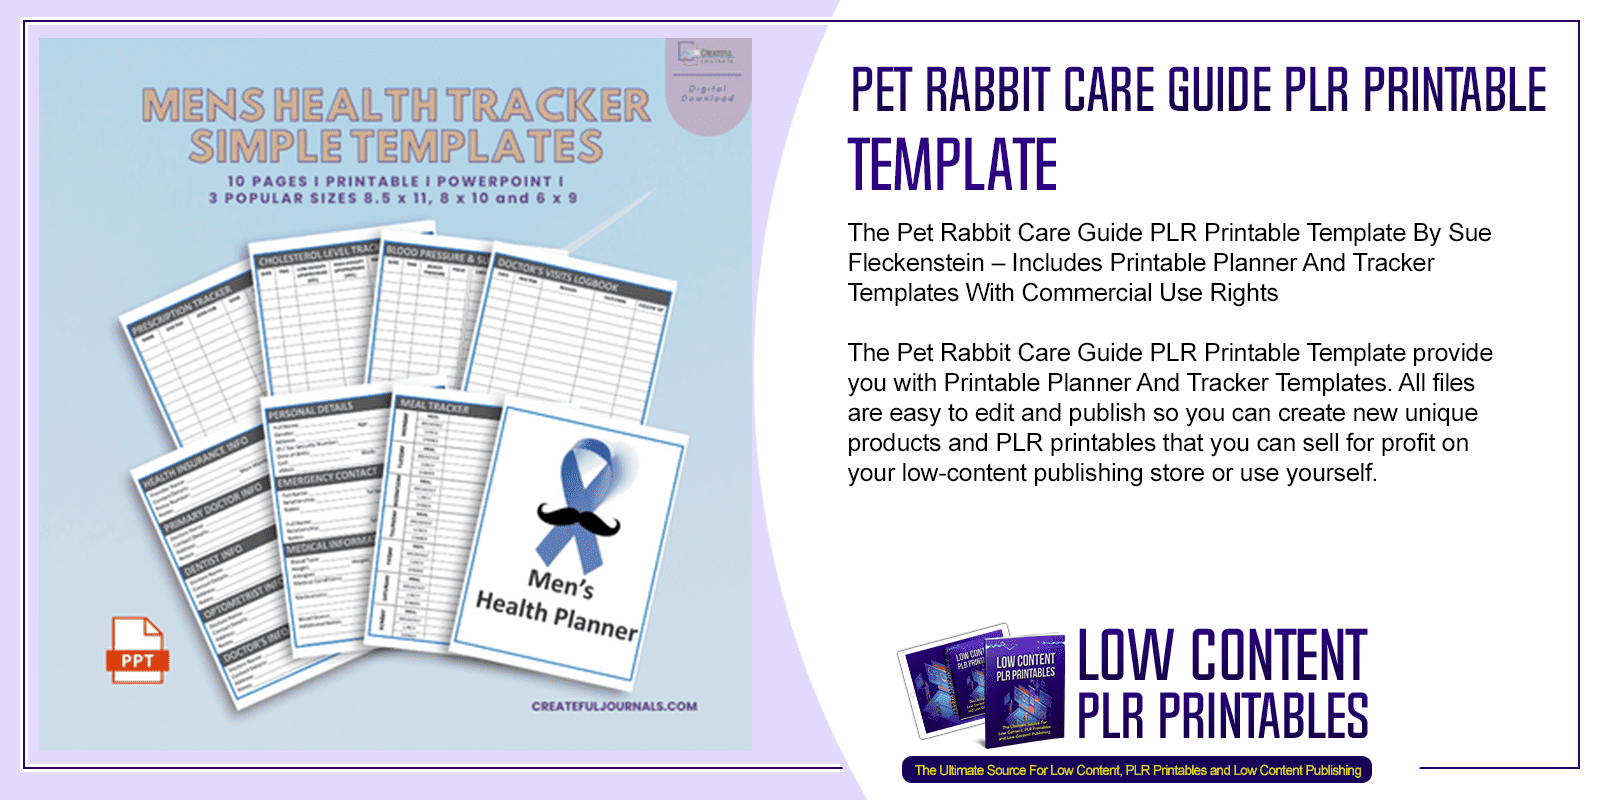 Pet Rabbit Care Guide PLR Printable Template